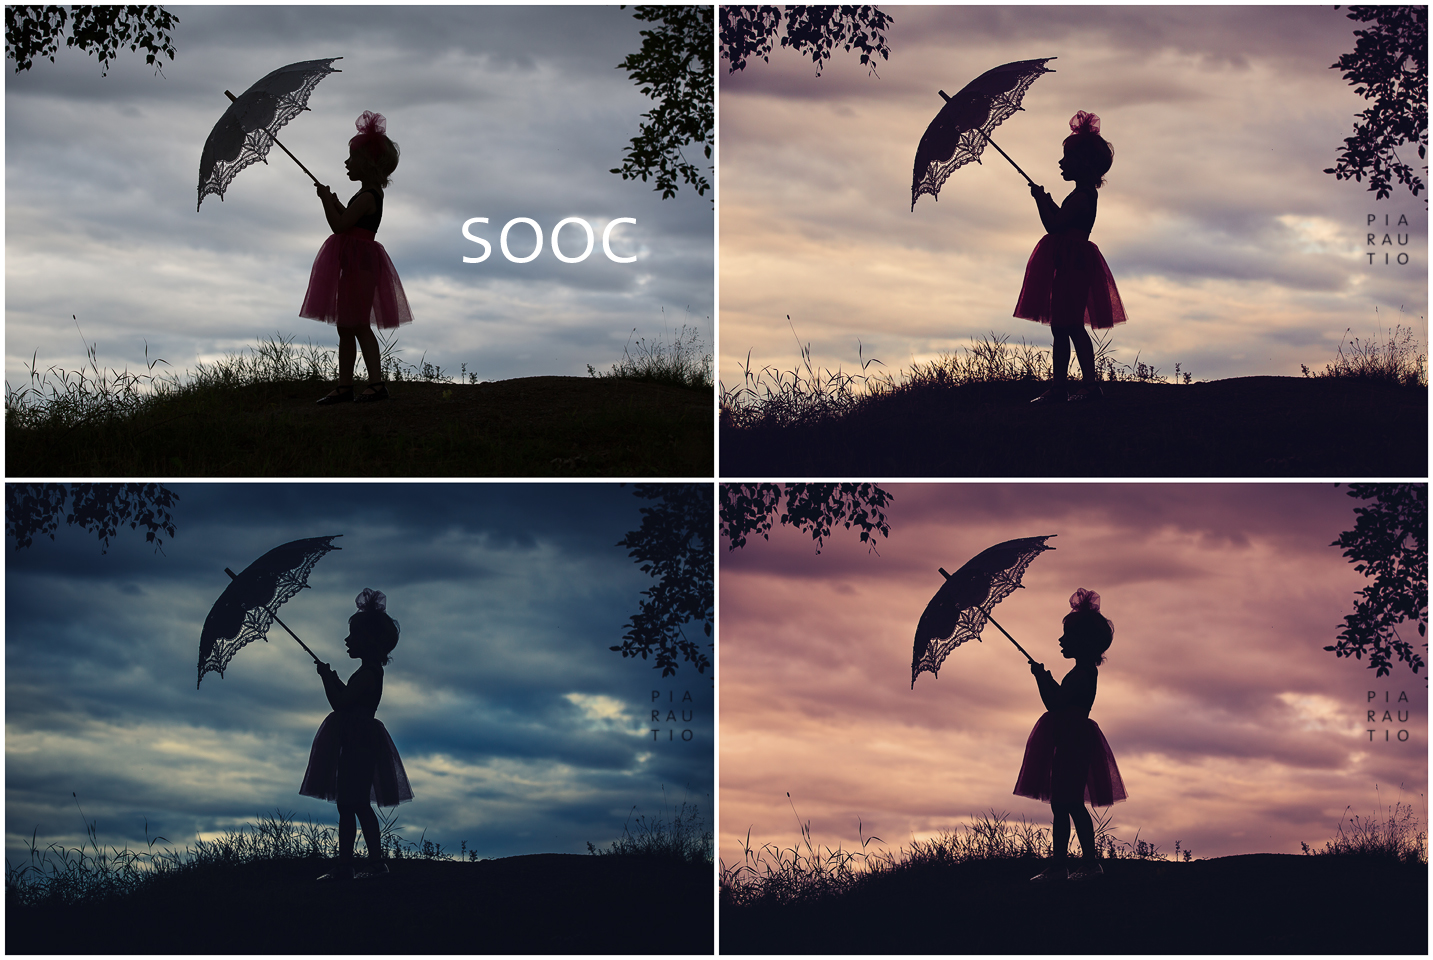 pia_sooc_3edits_parasol How to Edit Super Sweet Silhouette Photos Blueprints Lightroom Presets Photoshop Actions  